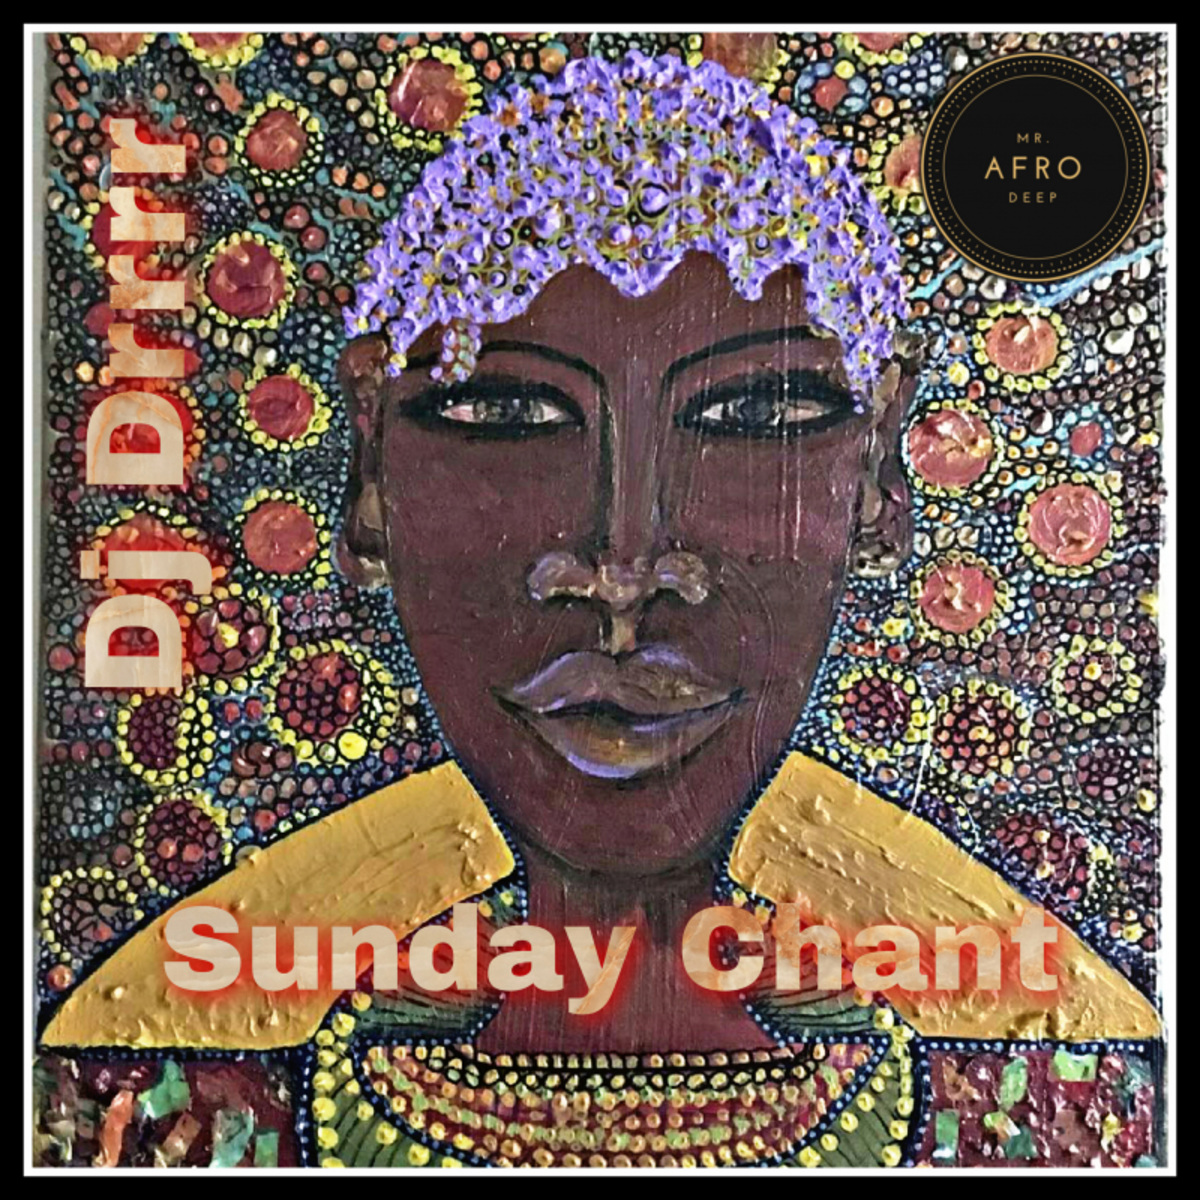 DJ Drrrr - Sunday Chant / Mr. Afro Deep